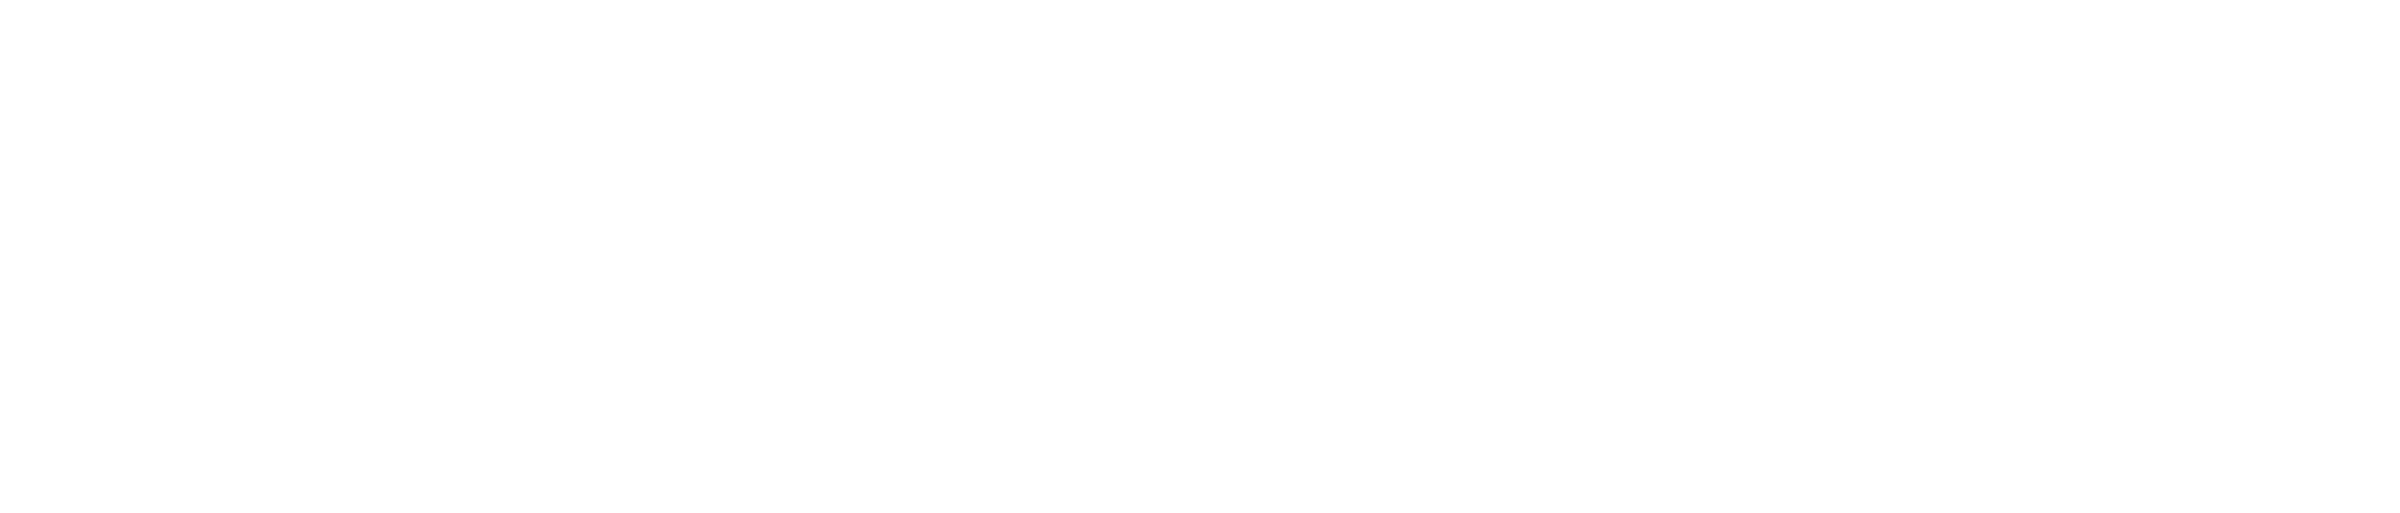 microsoft-logo-black-and-white